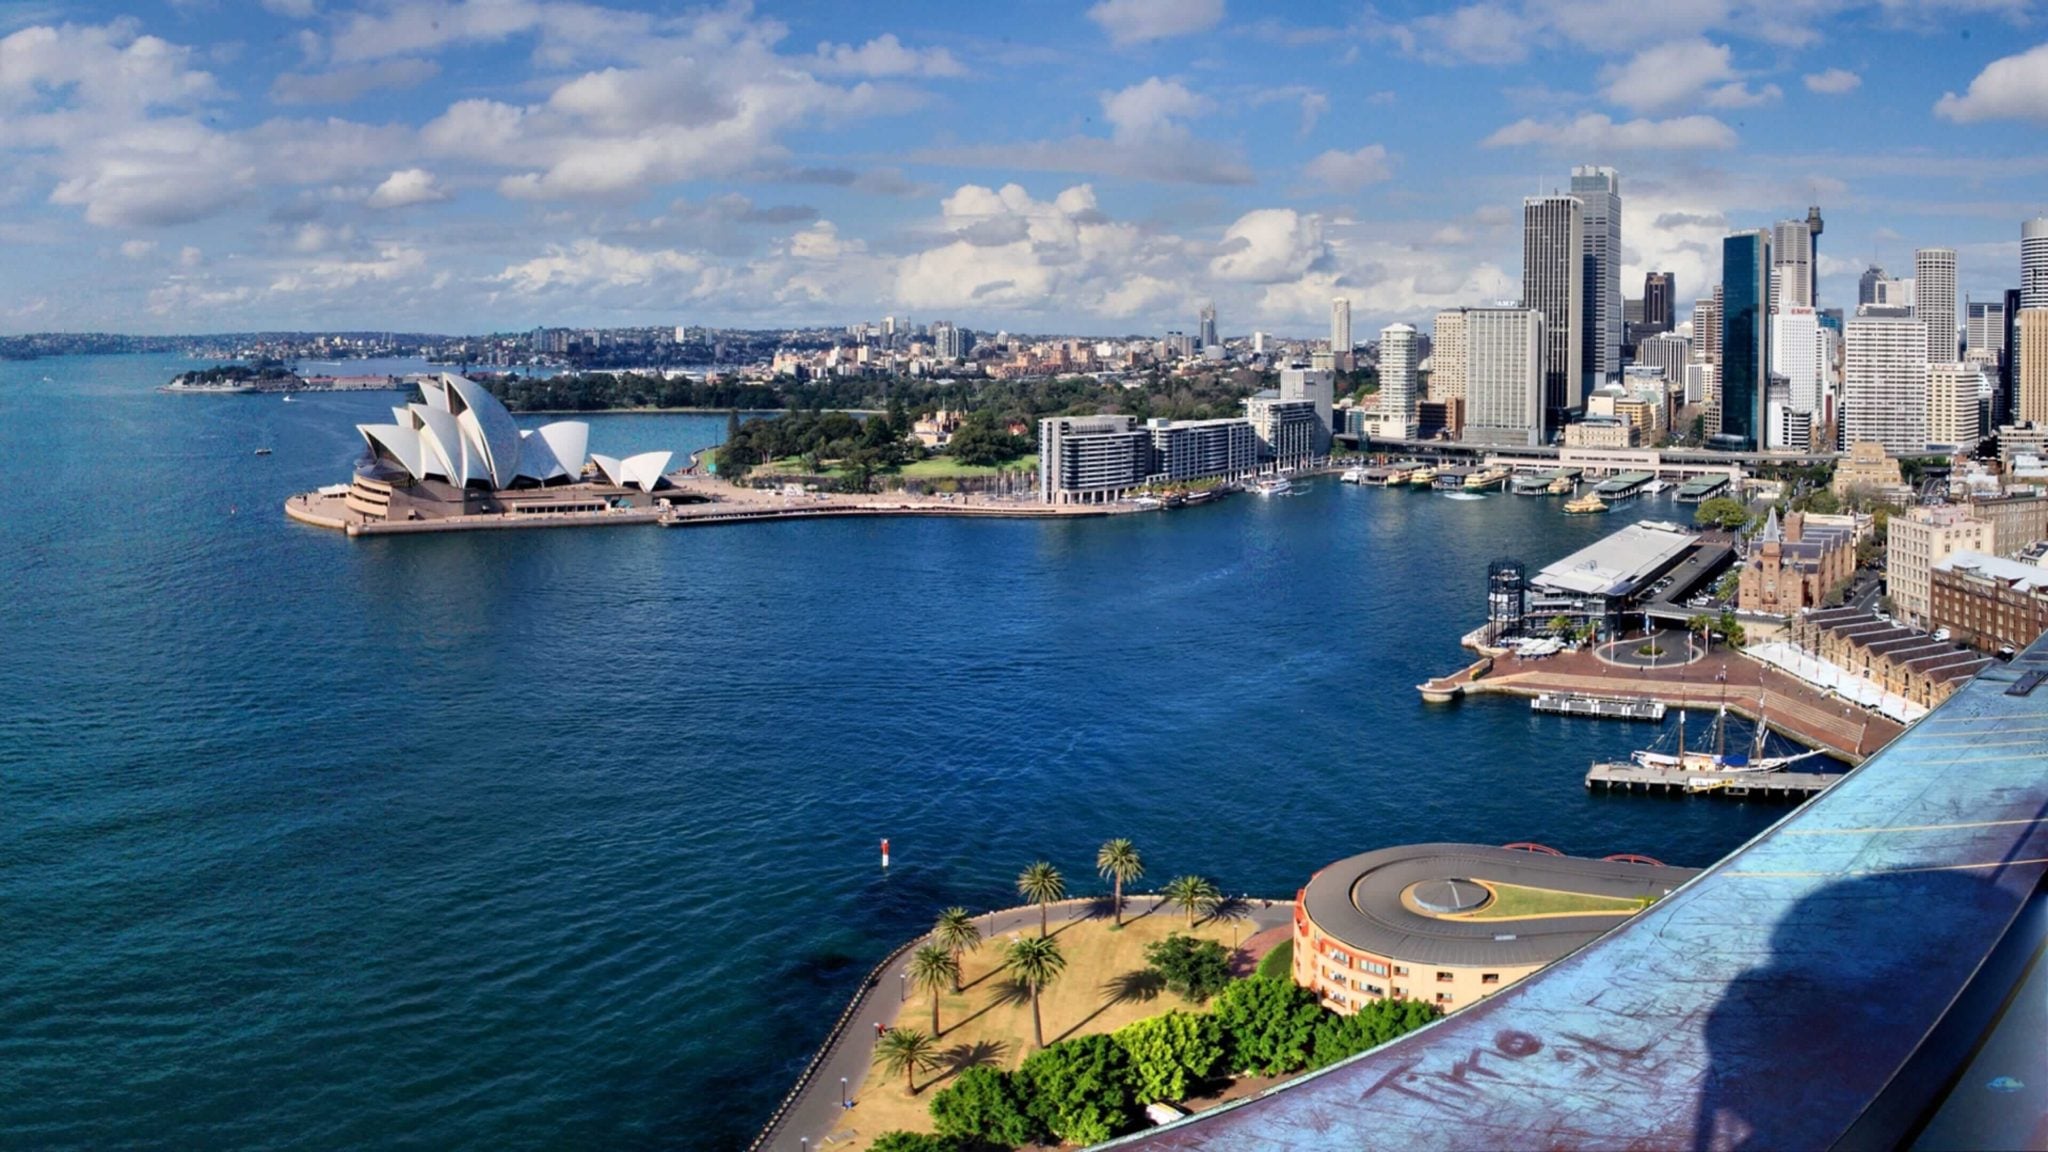 Nhà hát Opera Sydney - Du lịch Australia